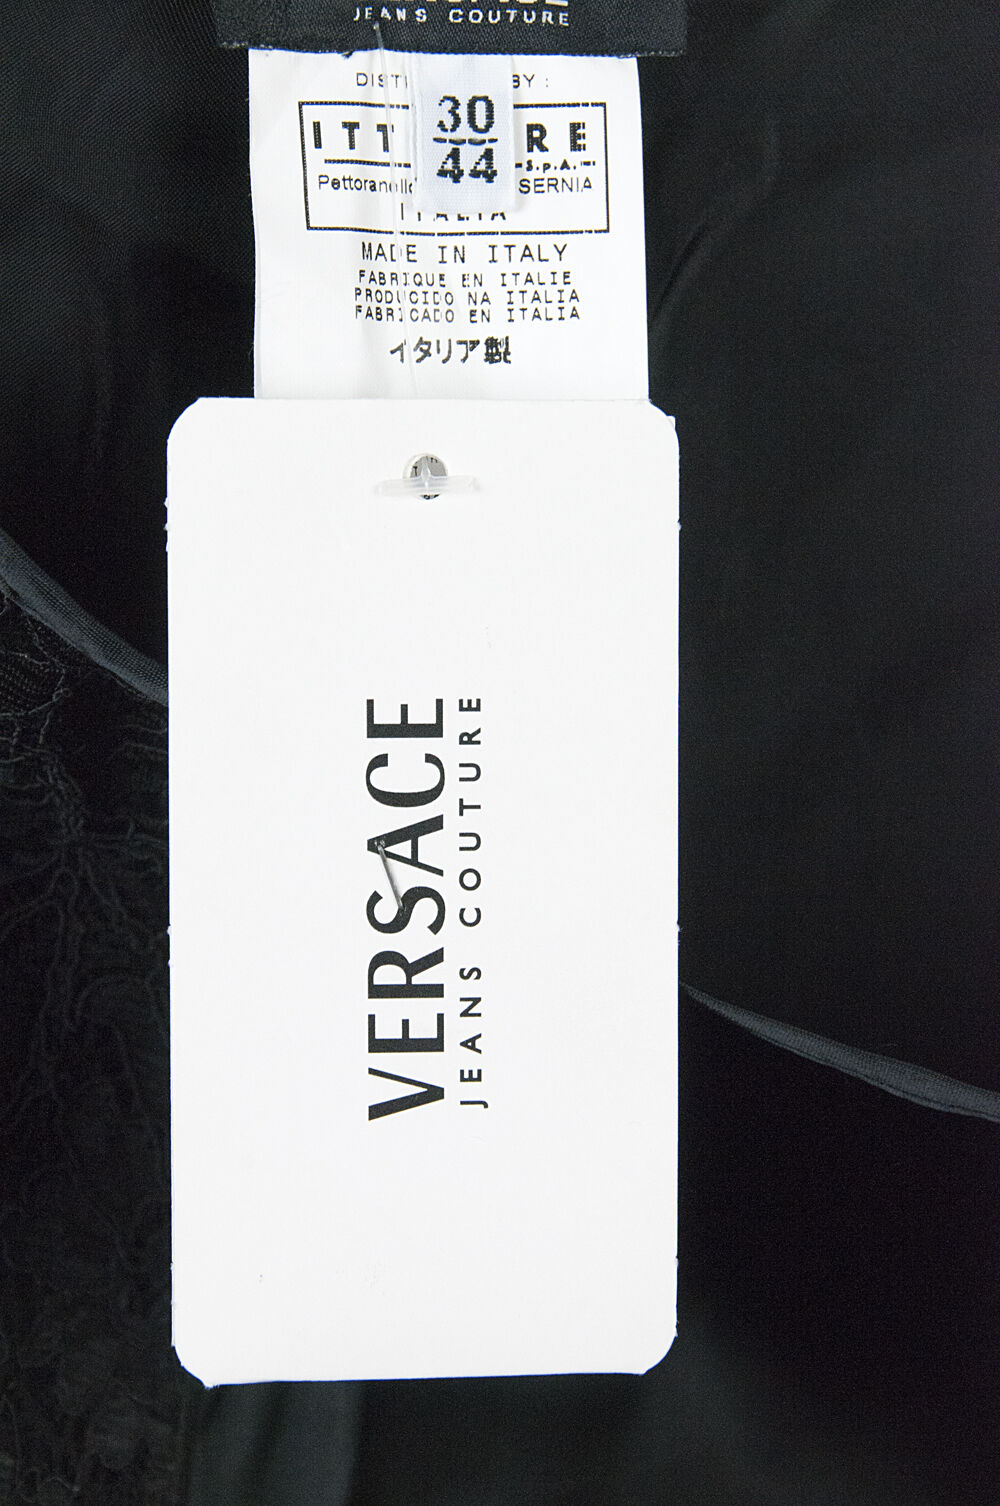 Versace Black Silky Lace Insert Knee Length A Line Skirt 30 44 NWT